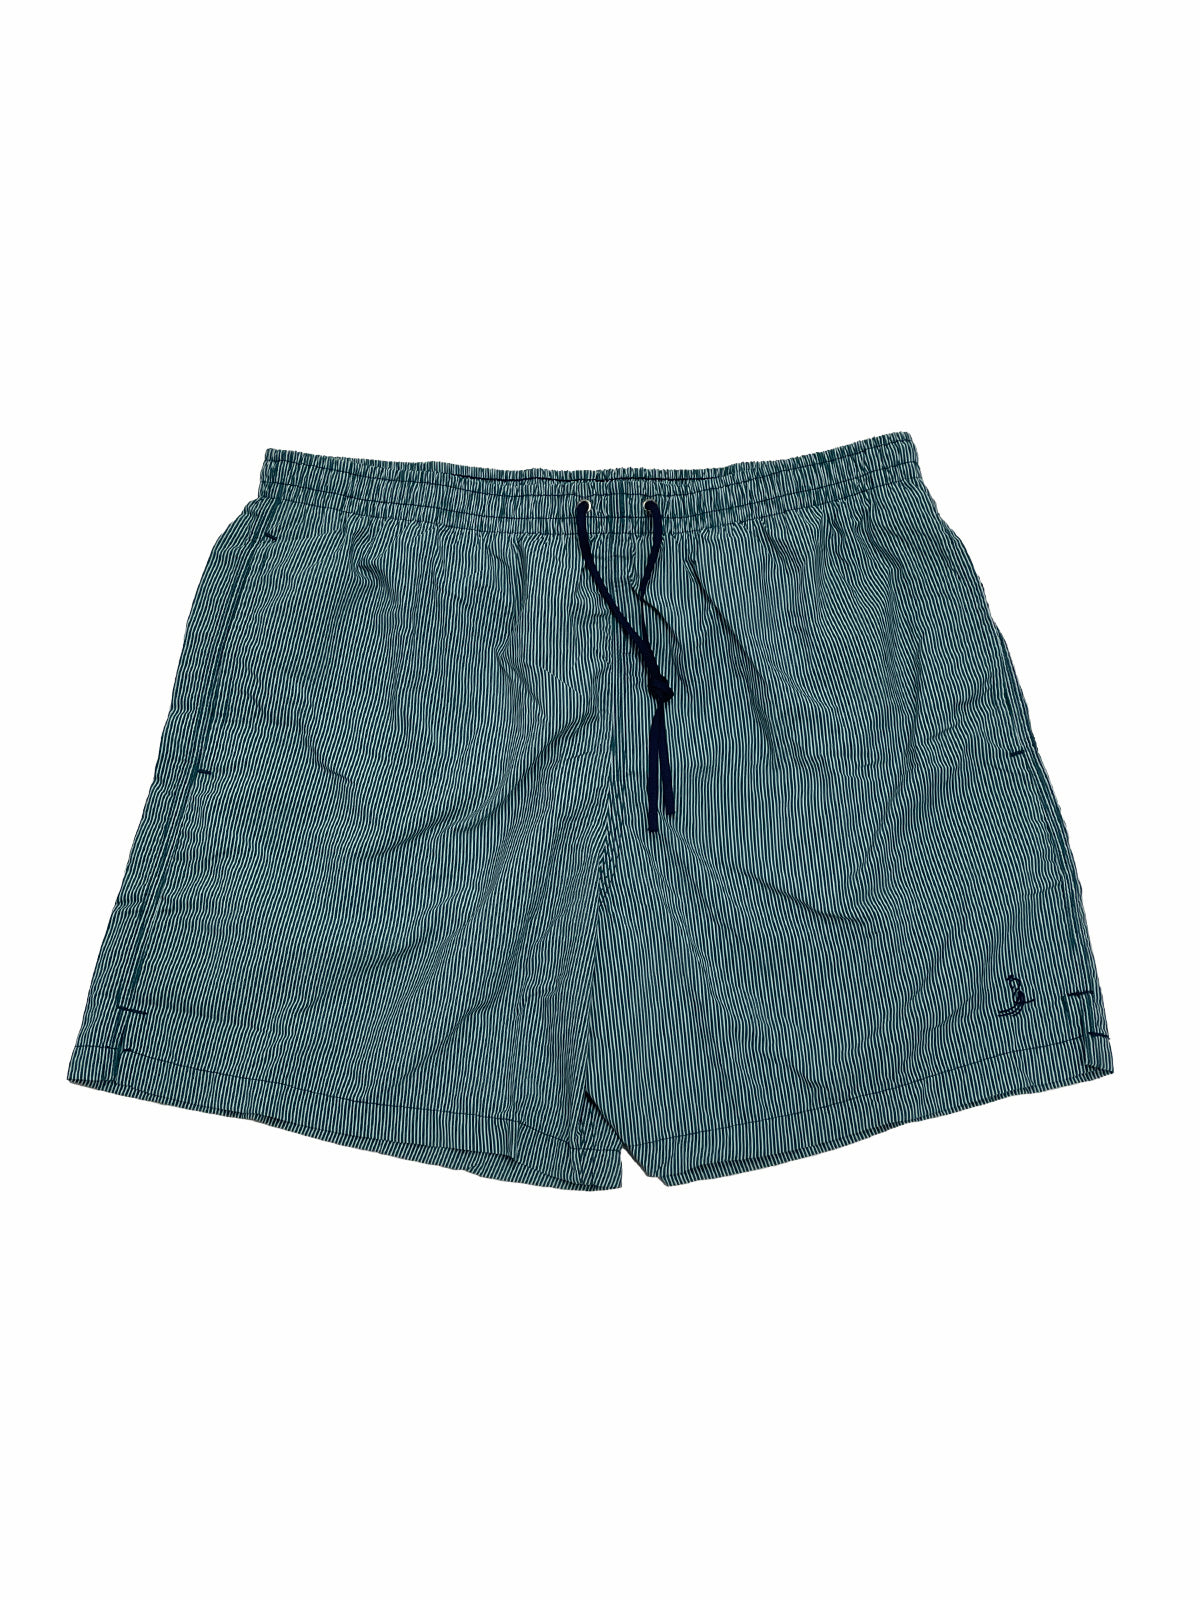 Narrow Green Stripe Printed Swim Shorts